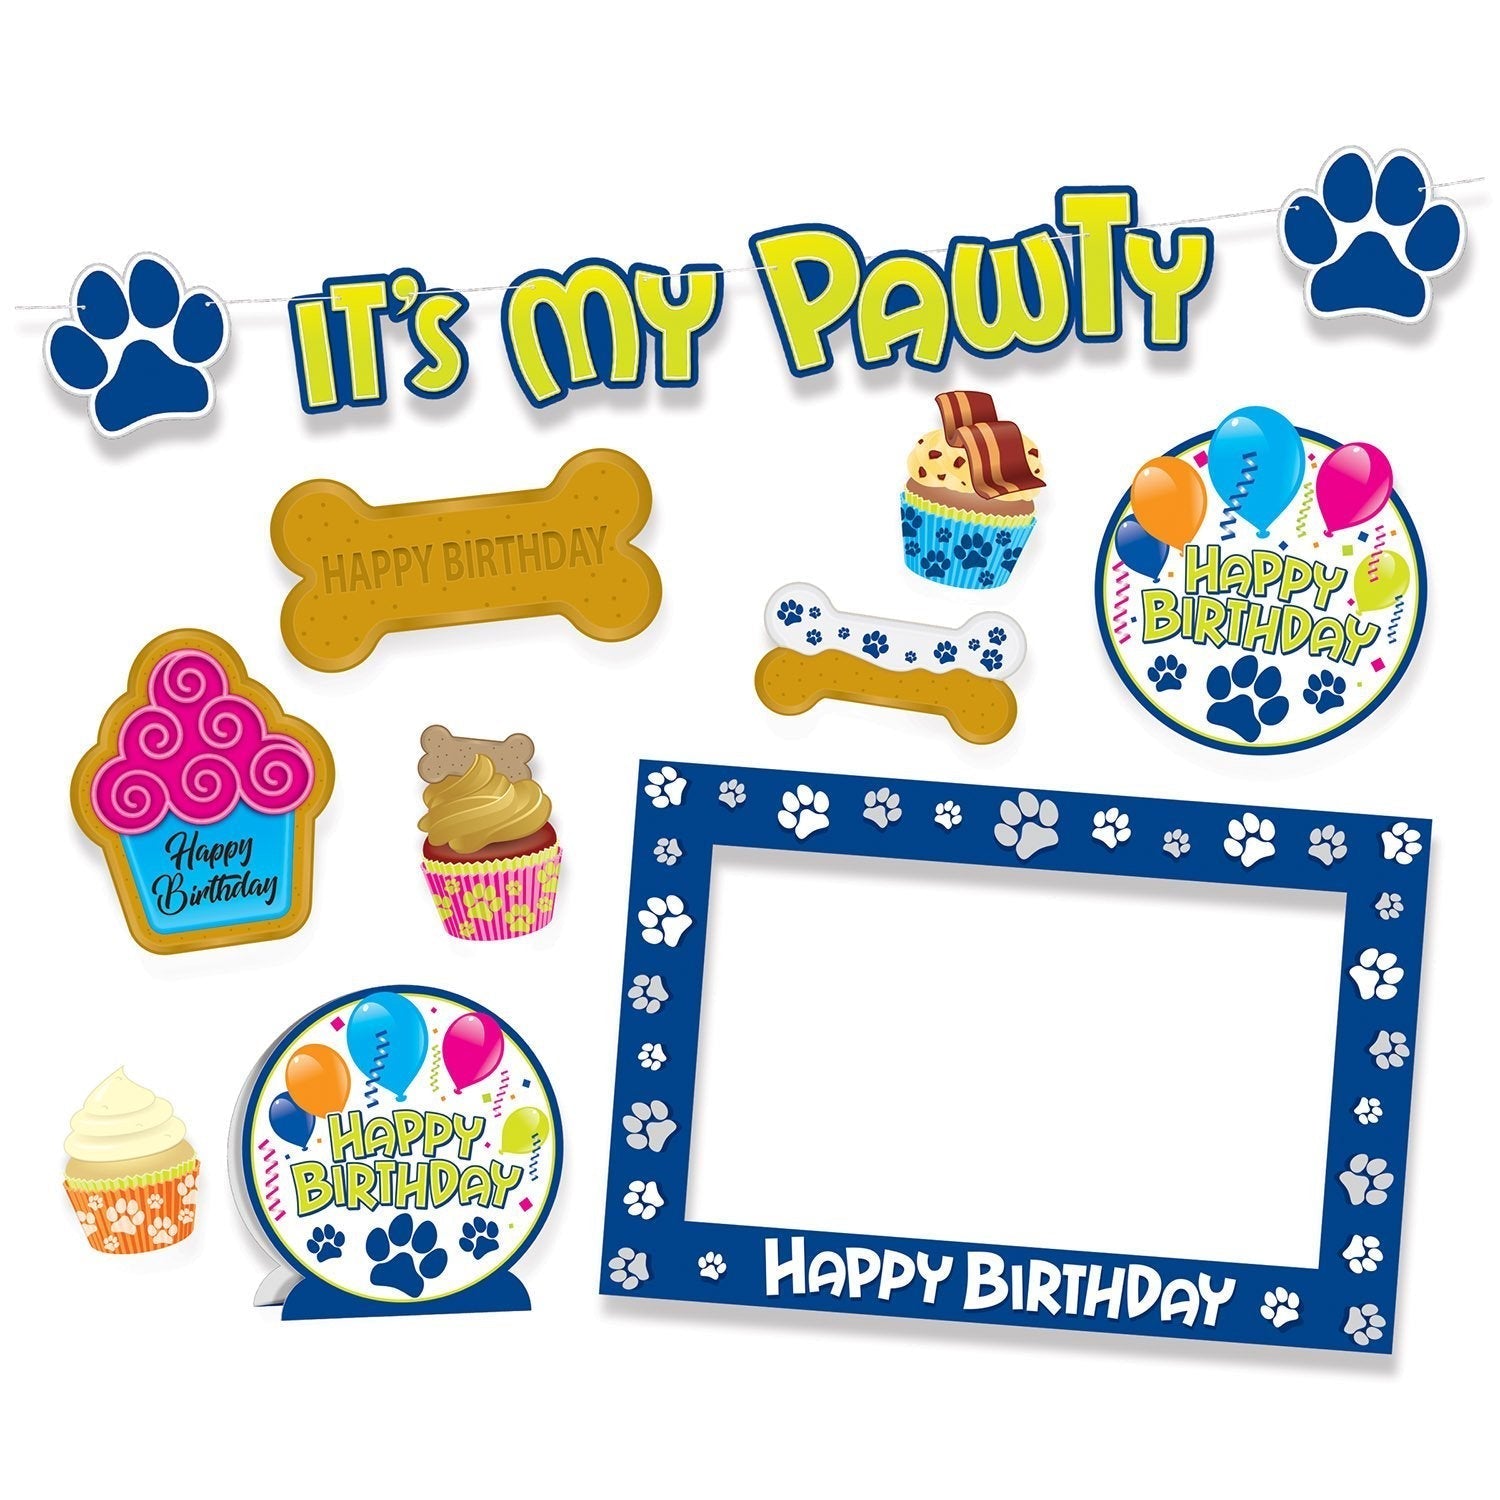 Pets Party Theme Decorations